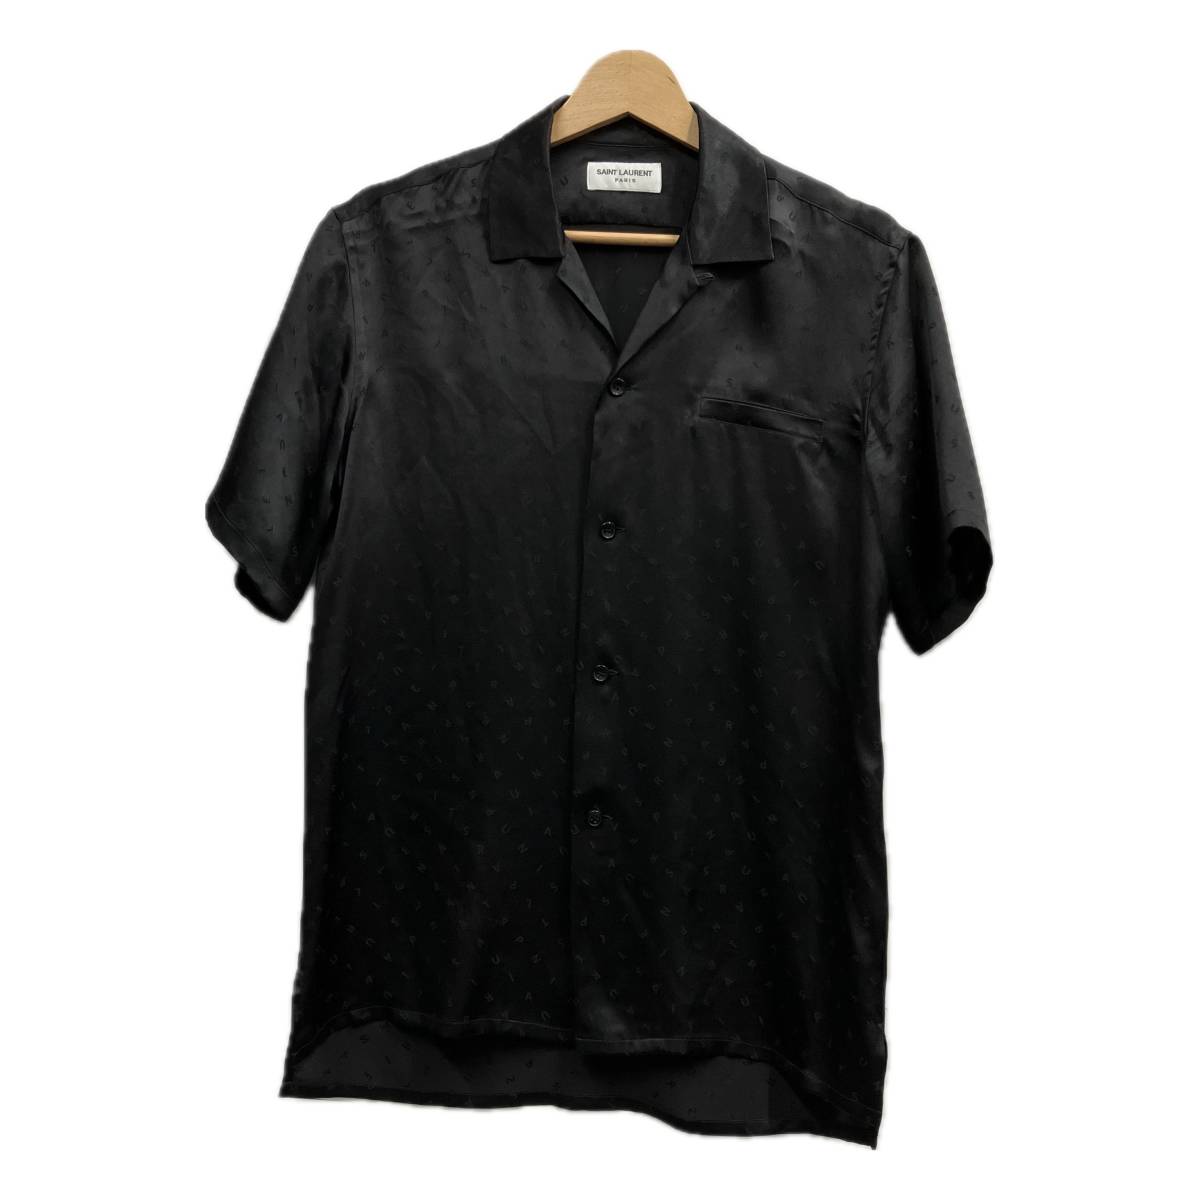 SAINT LAURENT PARIS sun rolan Paris Shark Collared Short Sleeve Silk Shirt 531956 Y2E51 silk shirt total pattern black size 41/16